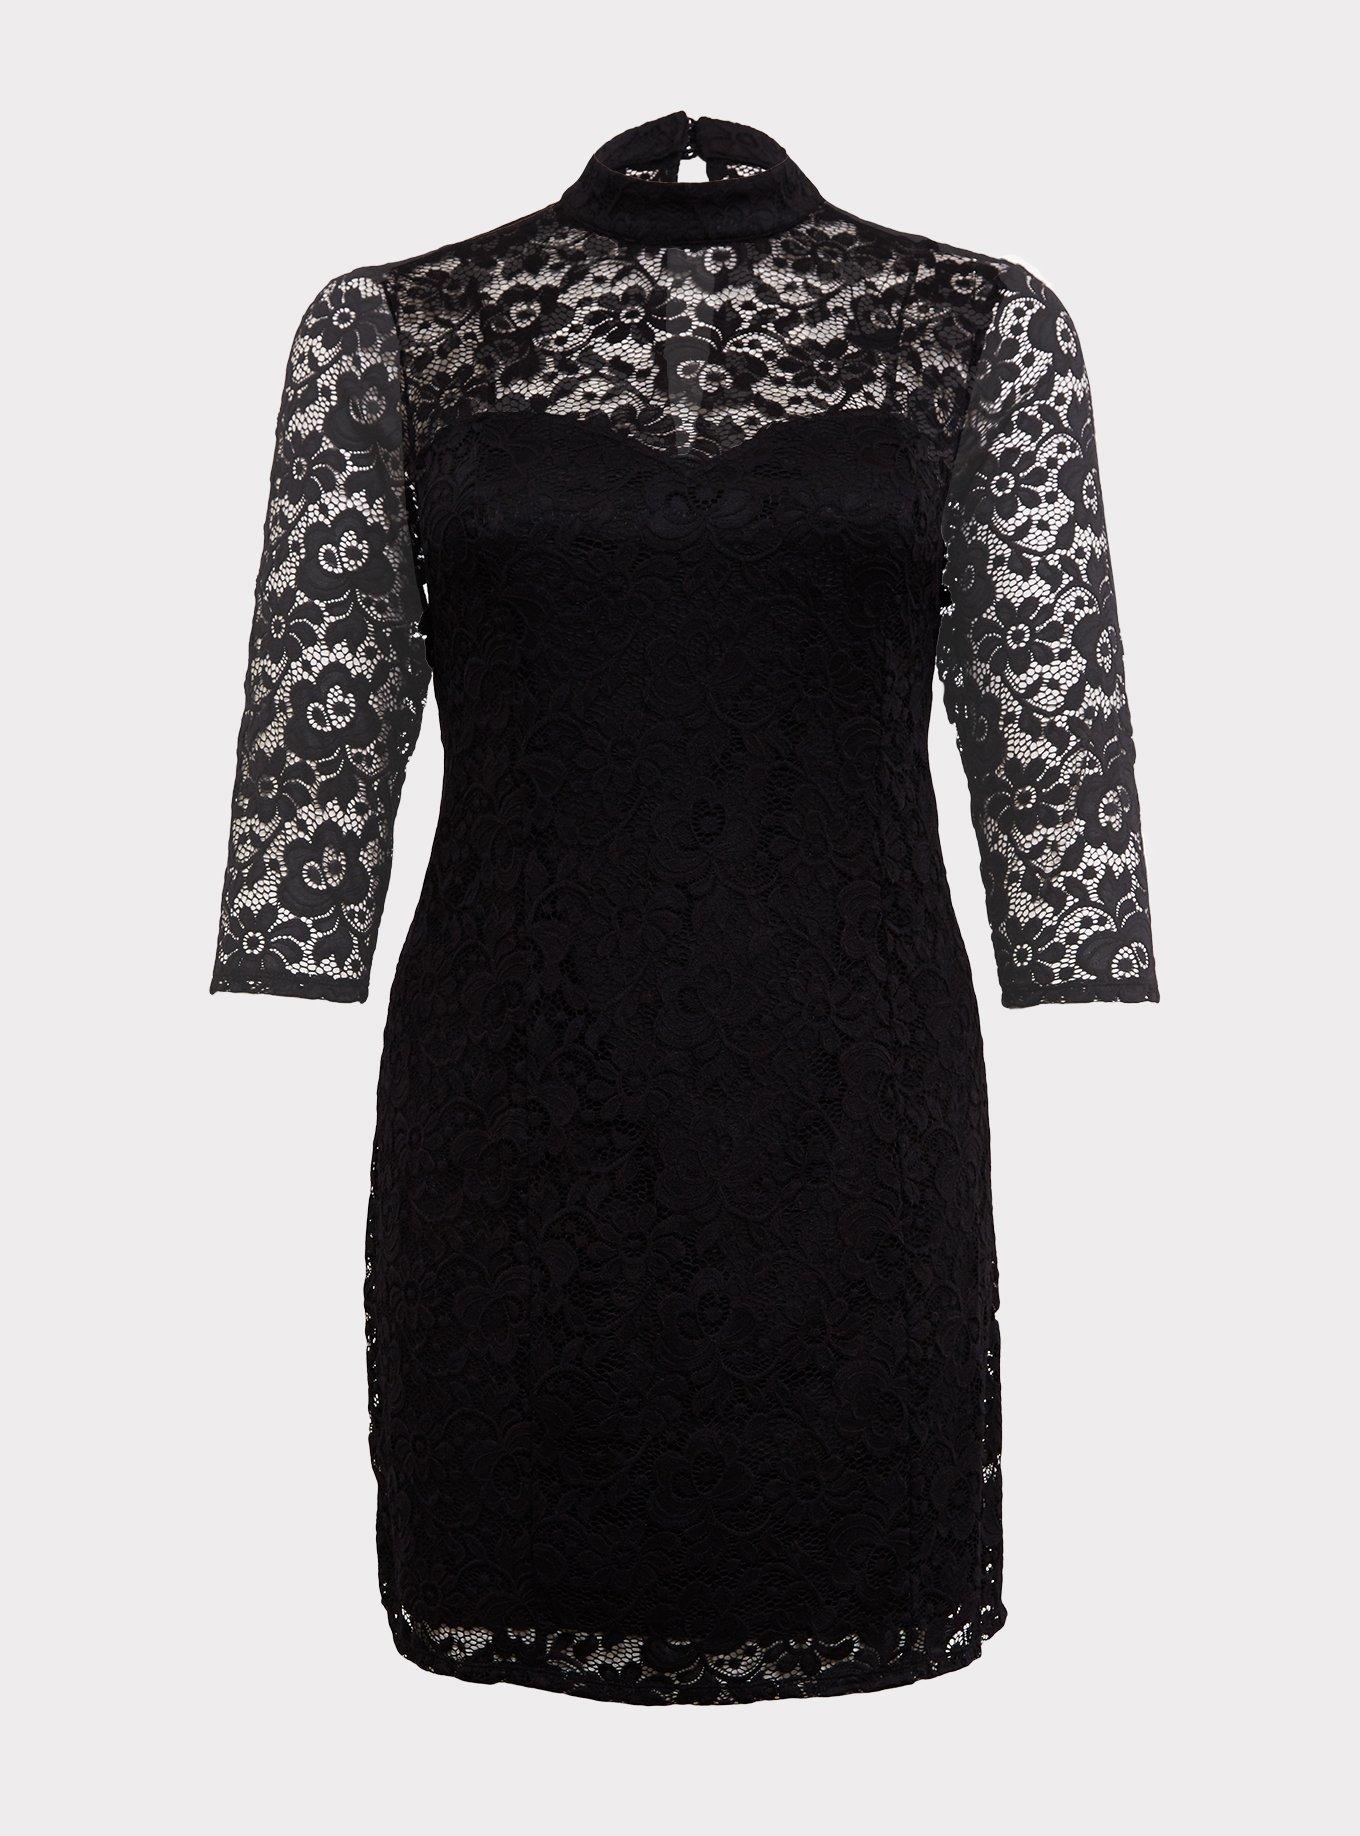 Plus Size - Black Lace Mock Neck Sheath Dress - Torrid